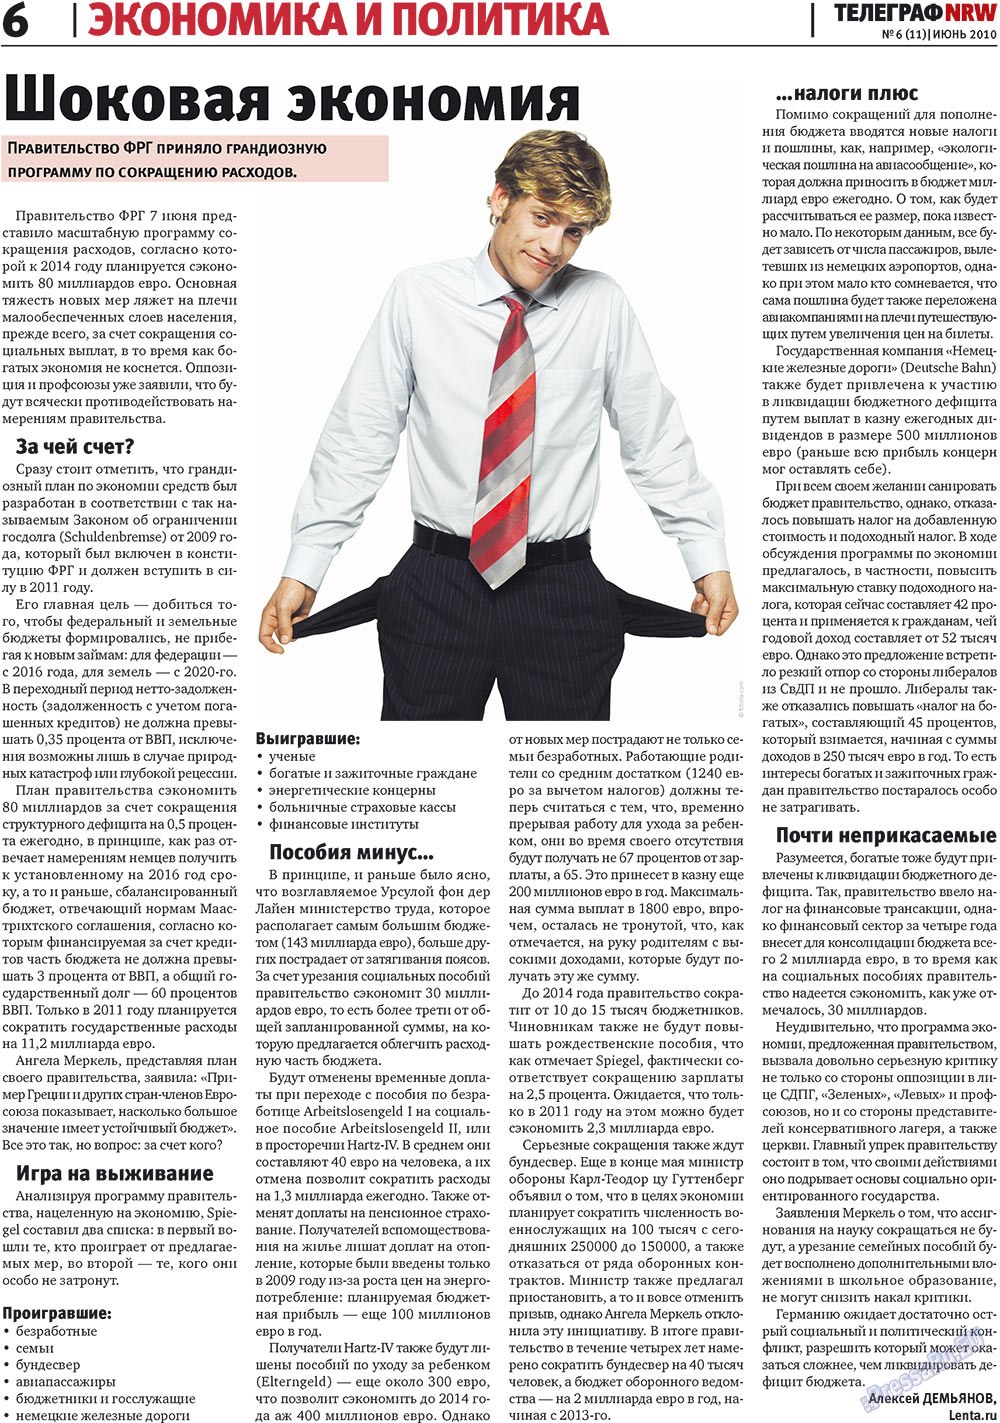 Телеграф NRW, газета. 2010 №6 стр.6